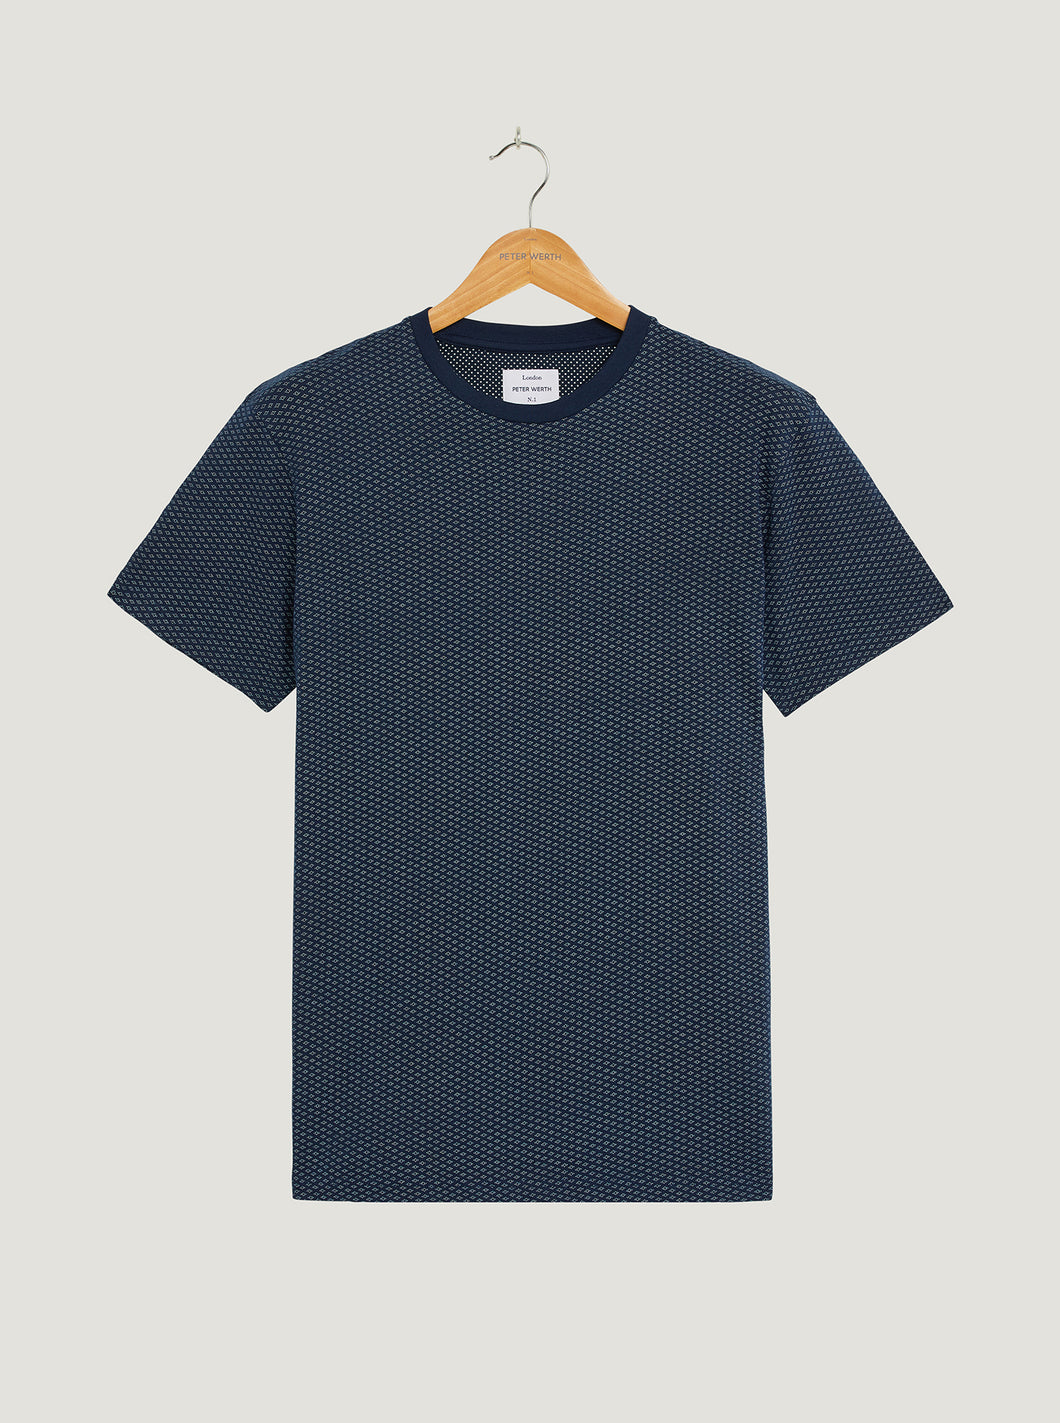 Moorgate T-Shirt - Navy